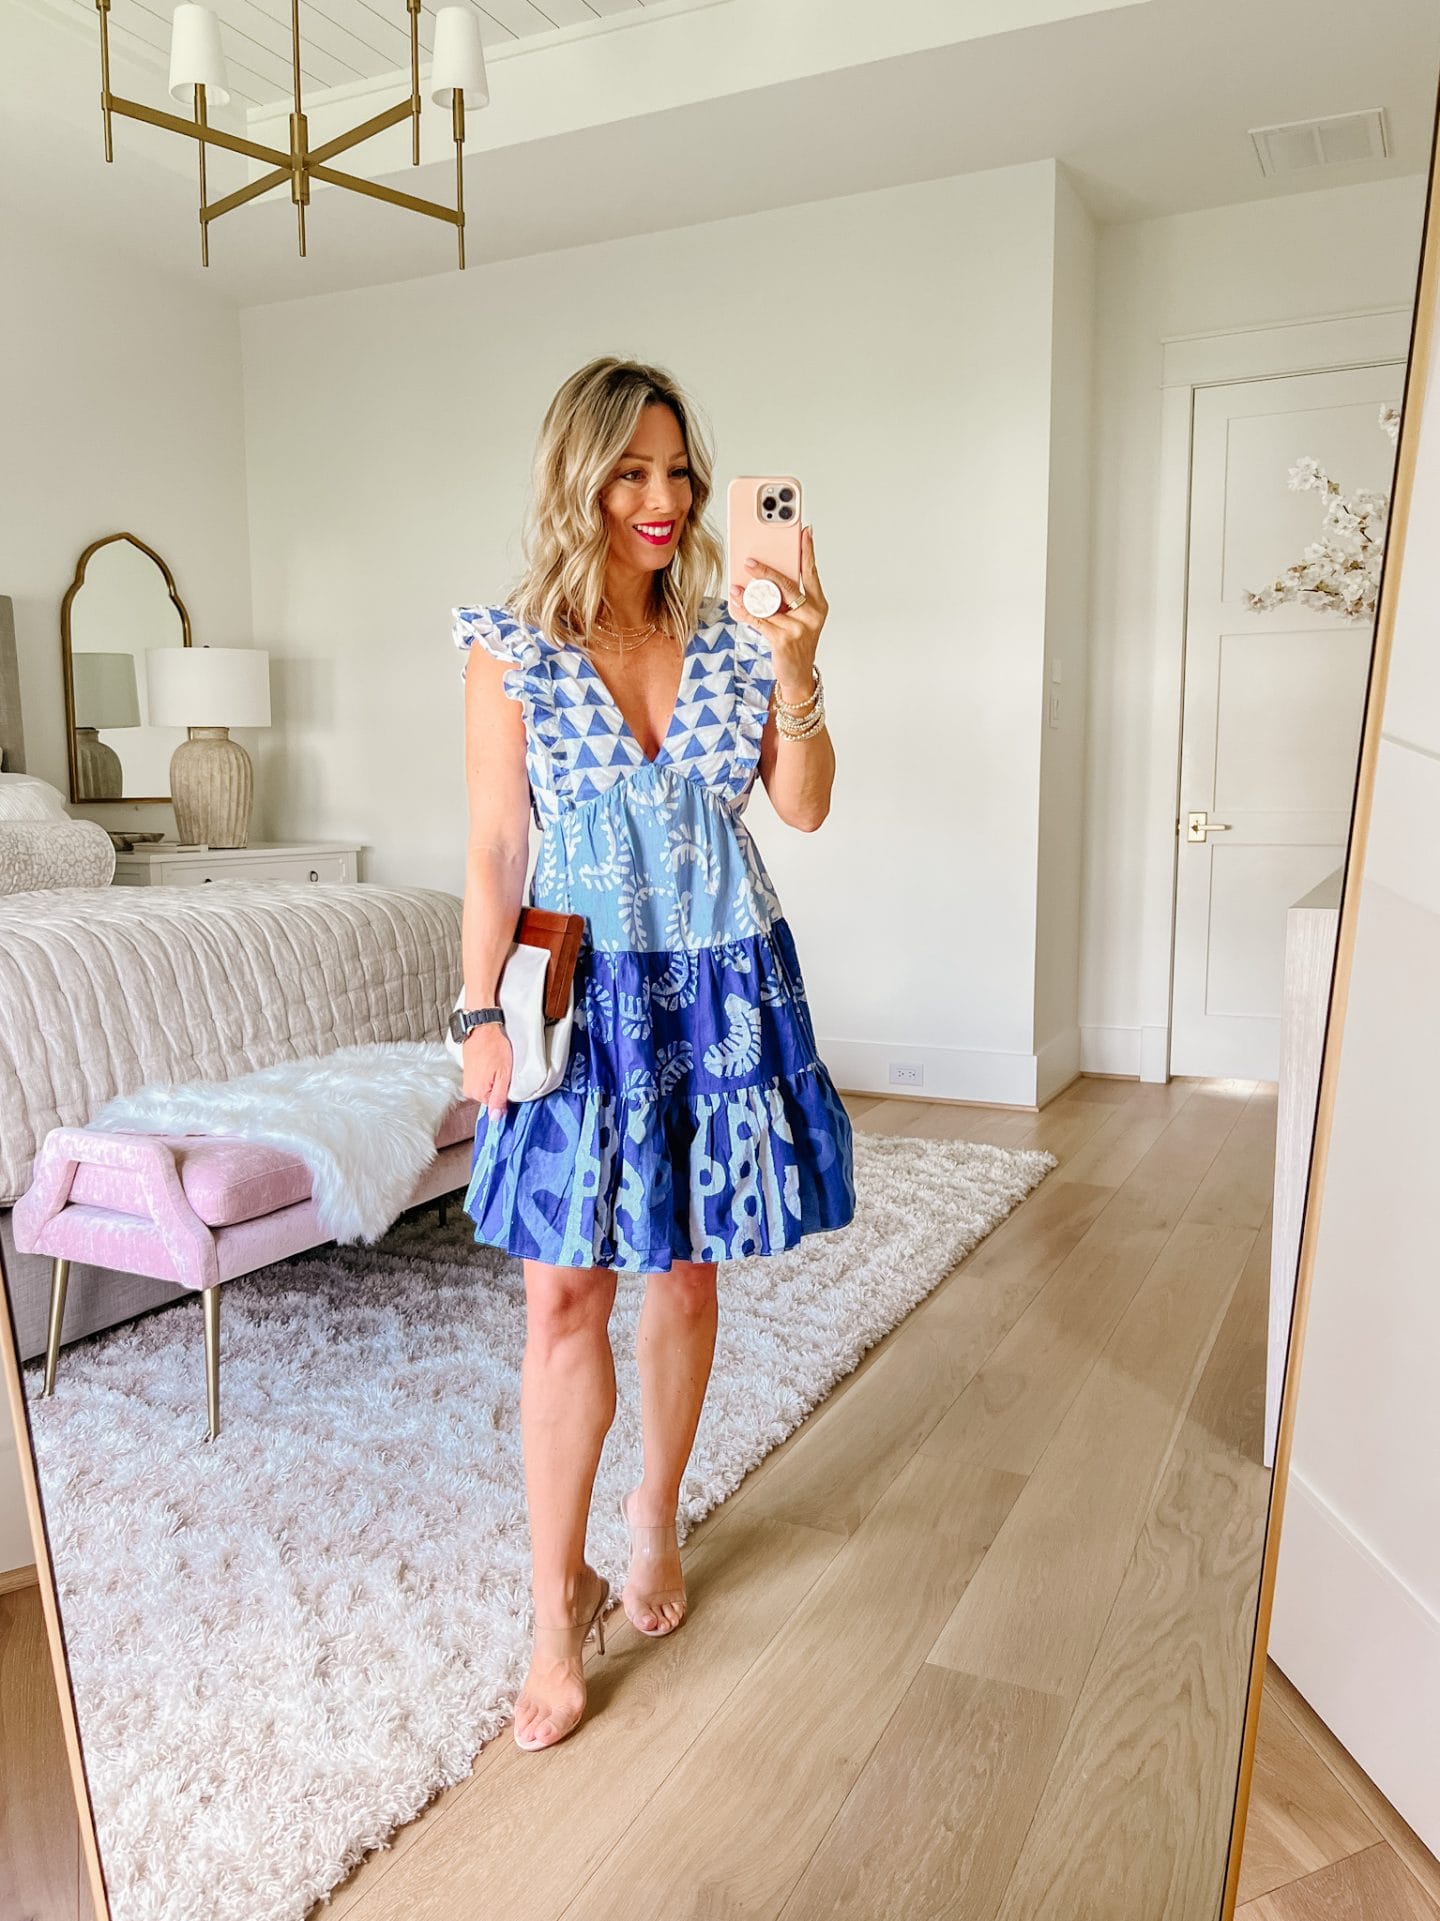 Blue and White Mix pattern Mini Dress, Sandals, Clutch 